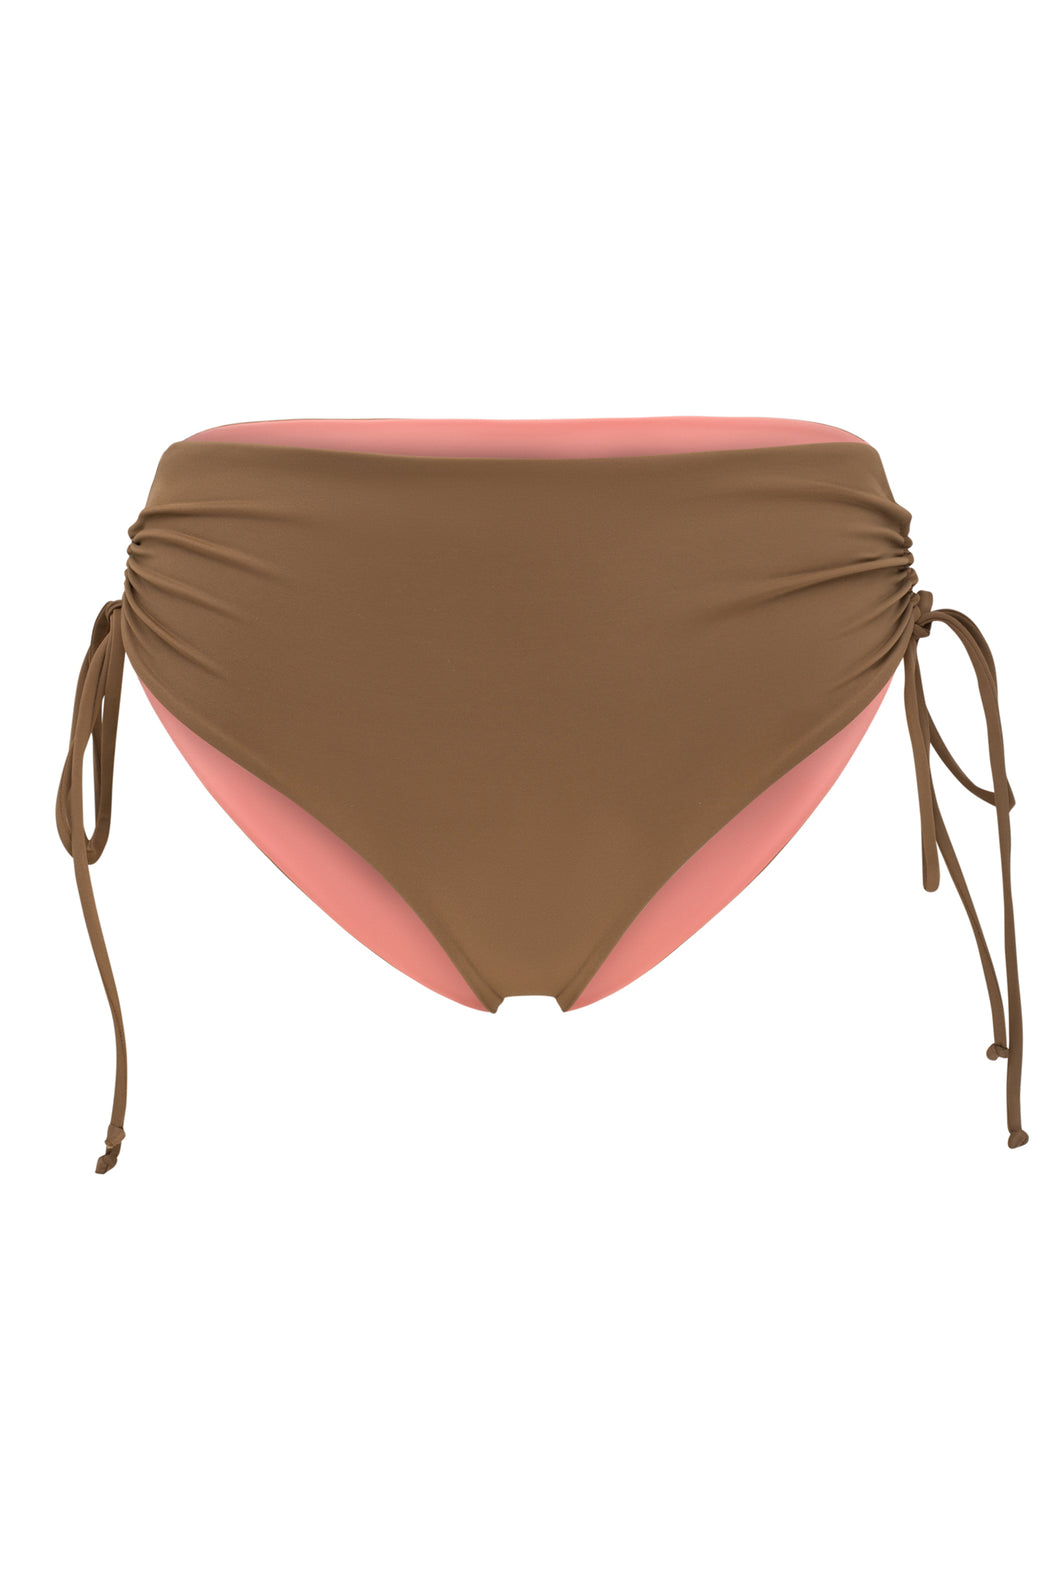 Ozero Swimwear Vida Bikini Bottom in Mocha color, designed in Kuala Lumpur from sustainable fabrics.